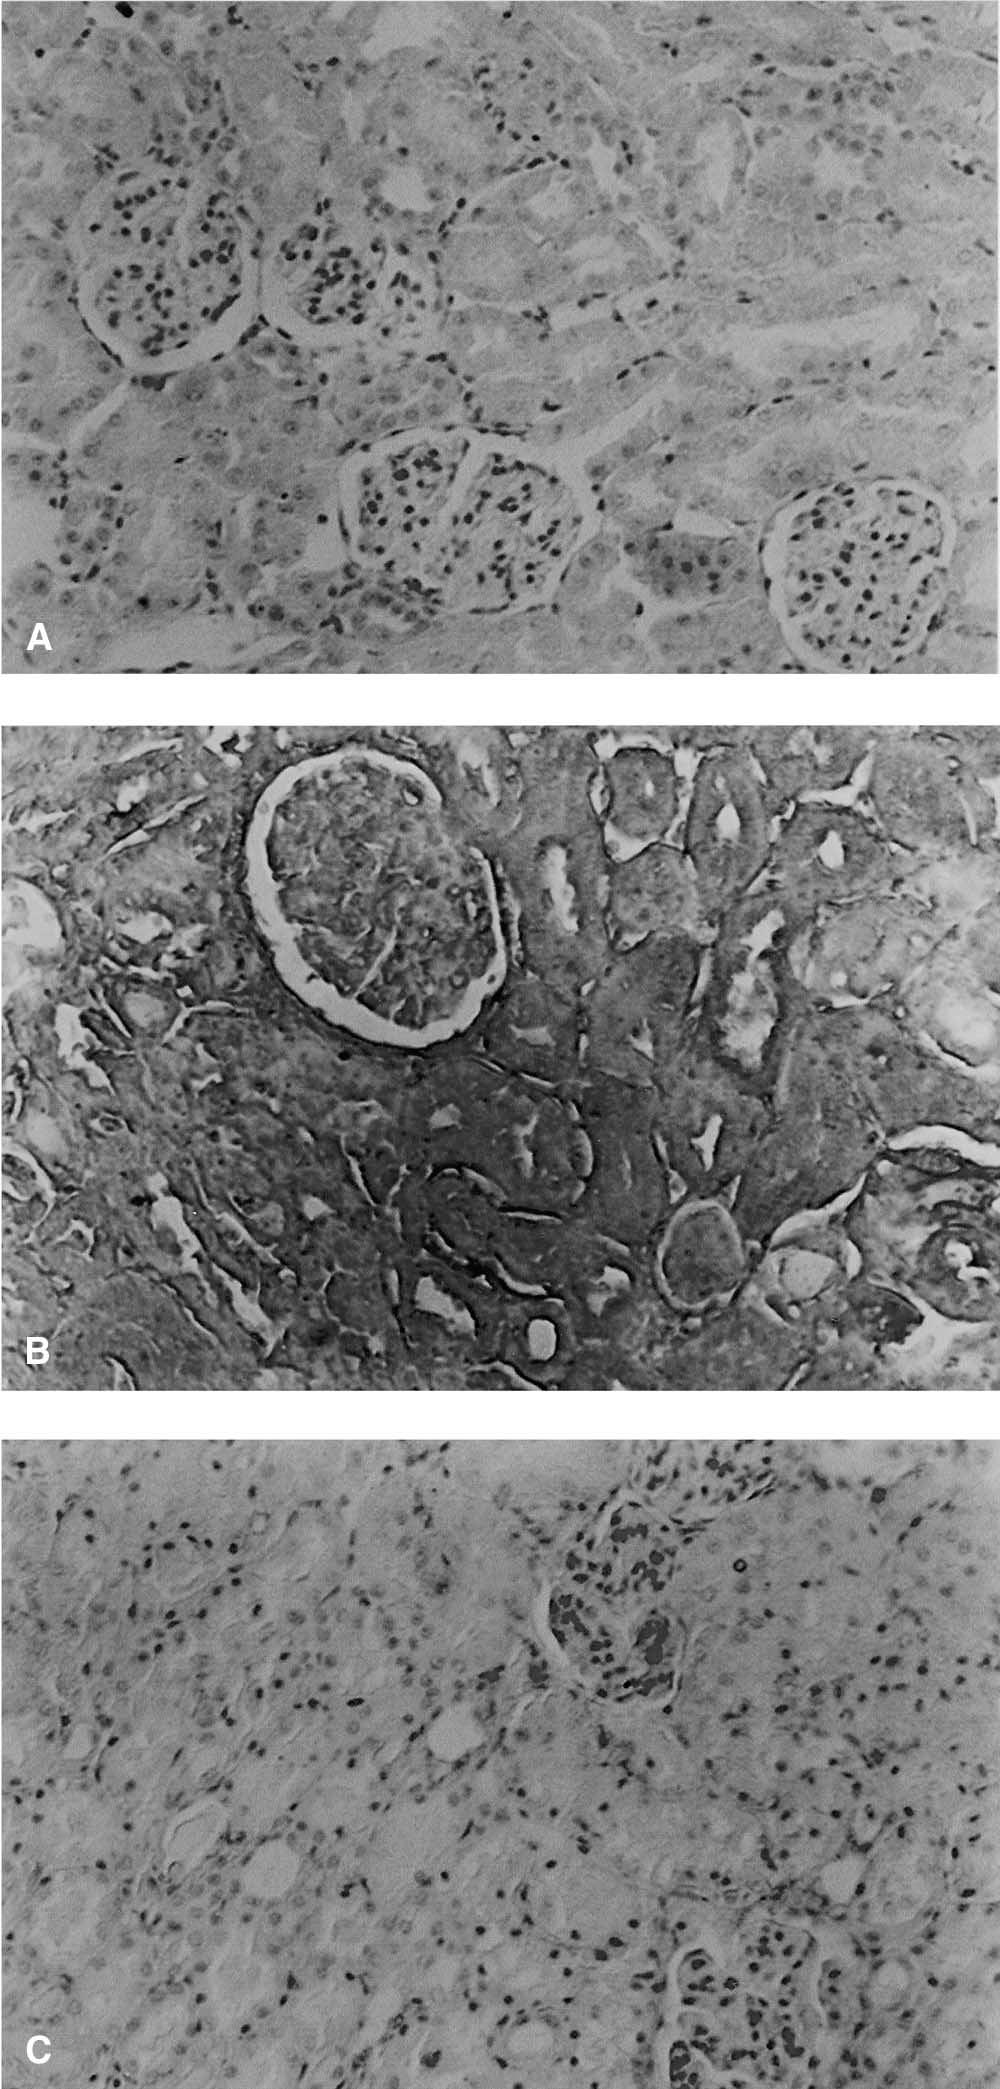 1612 Chatterjee et al: Tyrphostin AG126 reduces renal I/R injury Fig. 5.